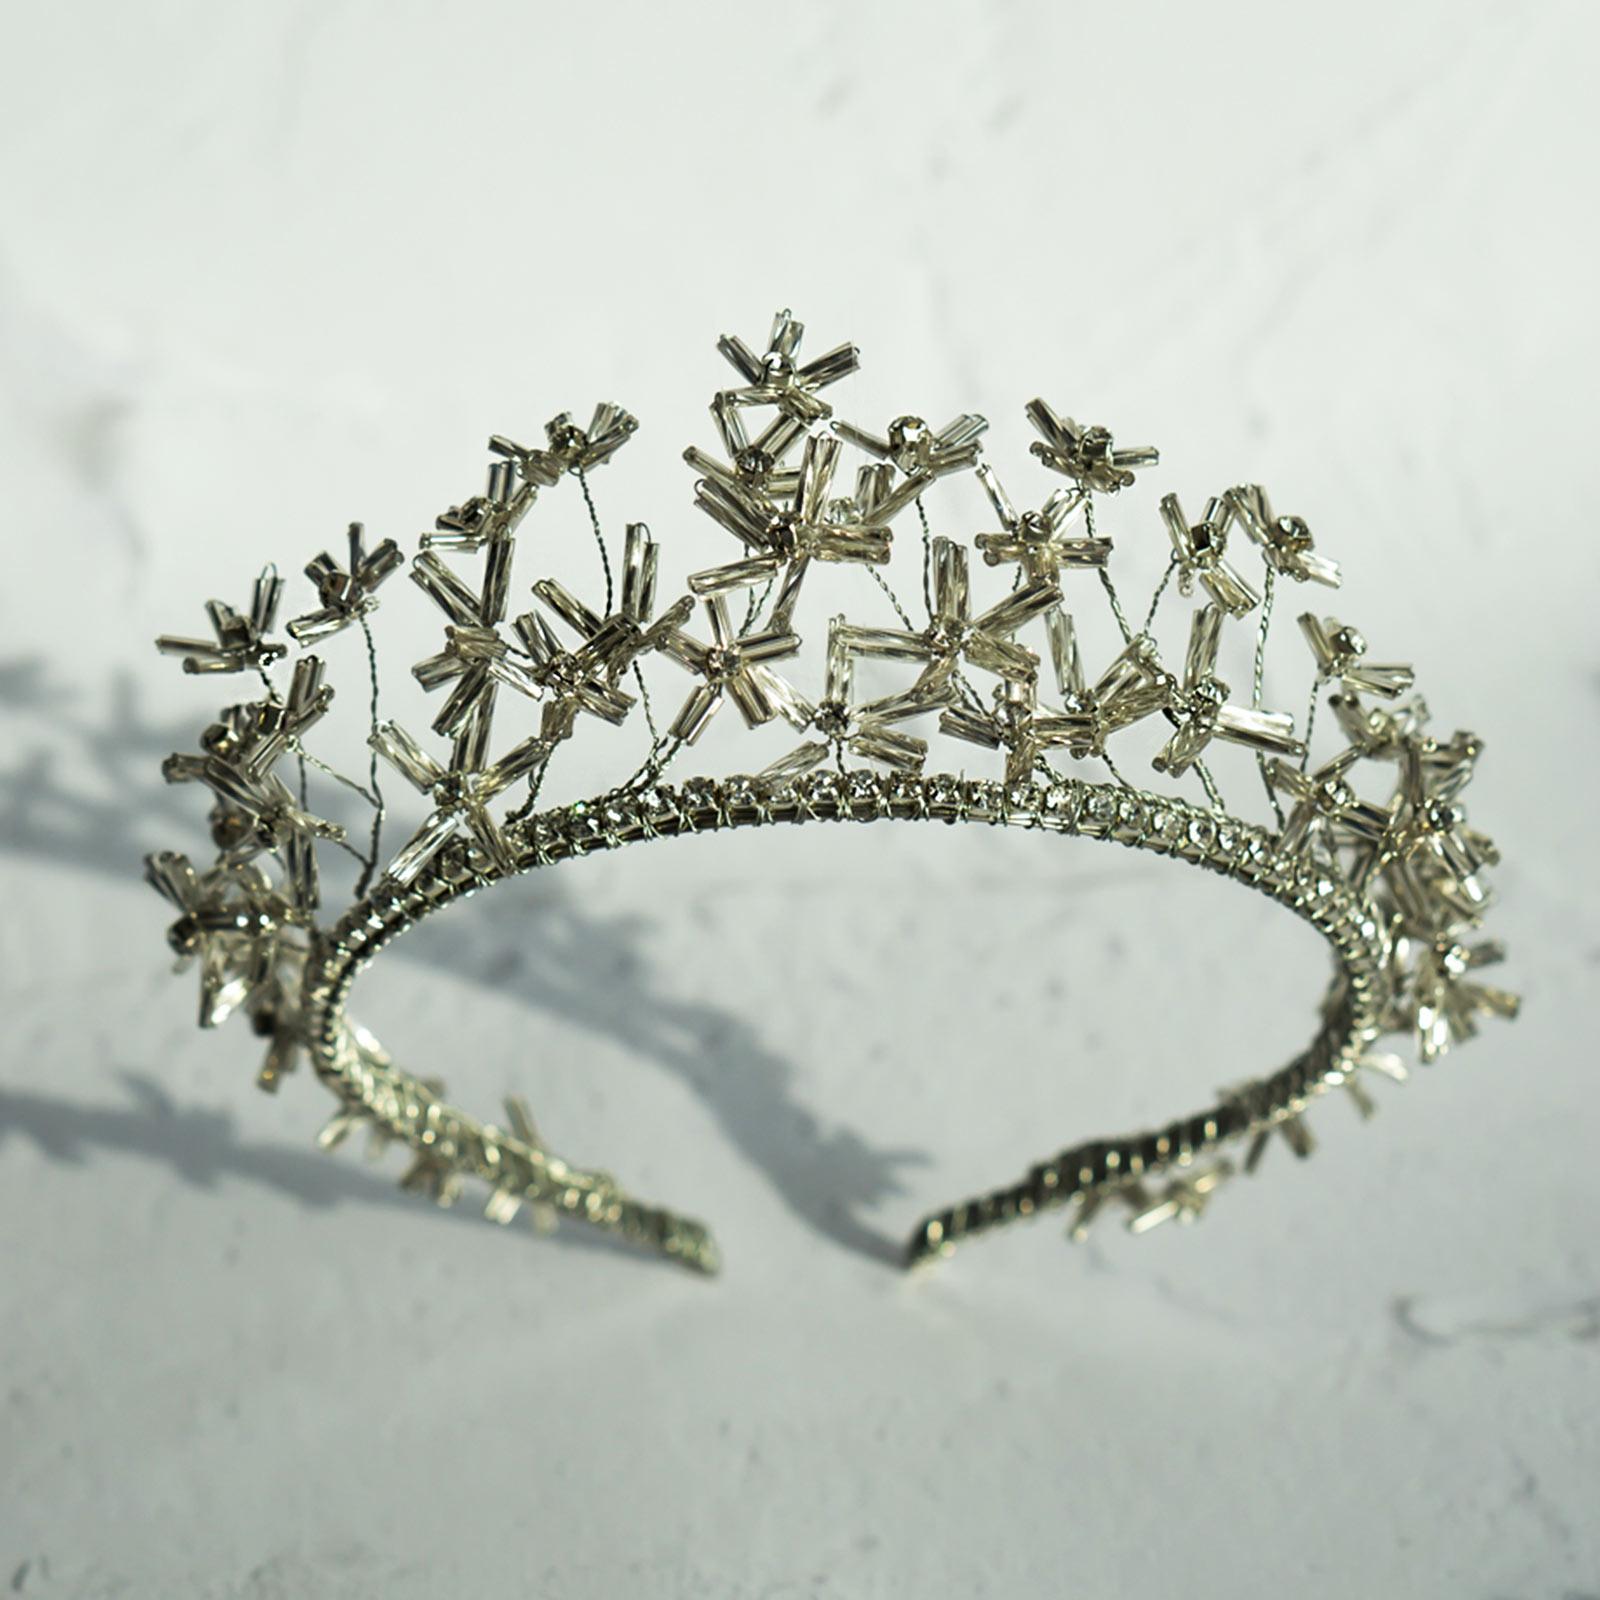 Daisy silver flower tiara on white background